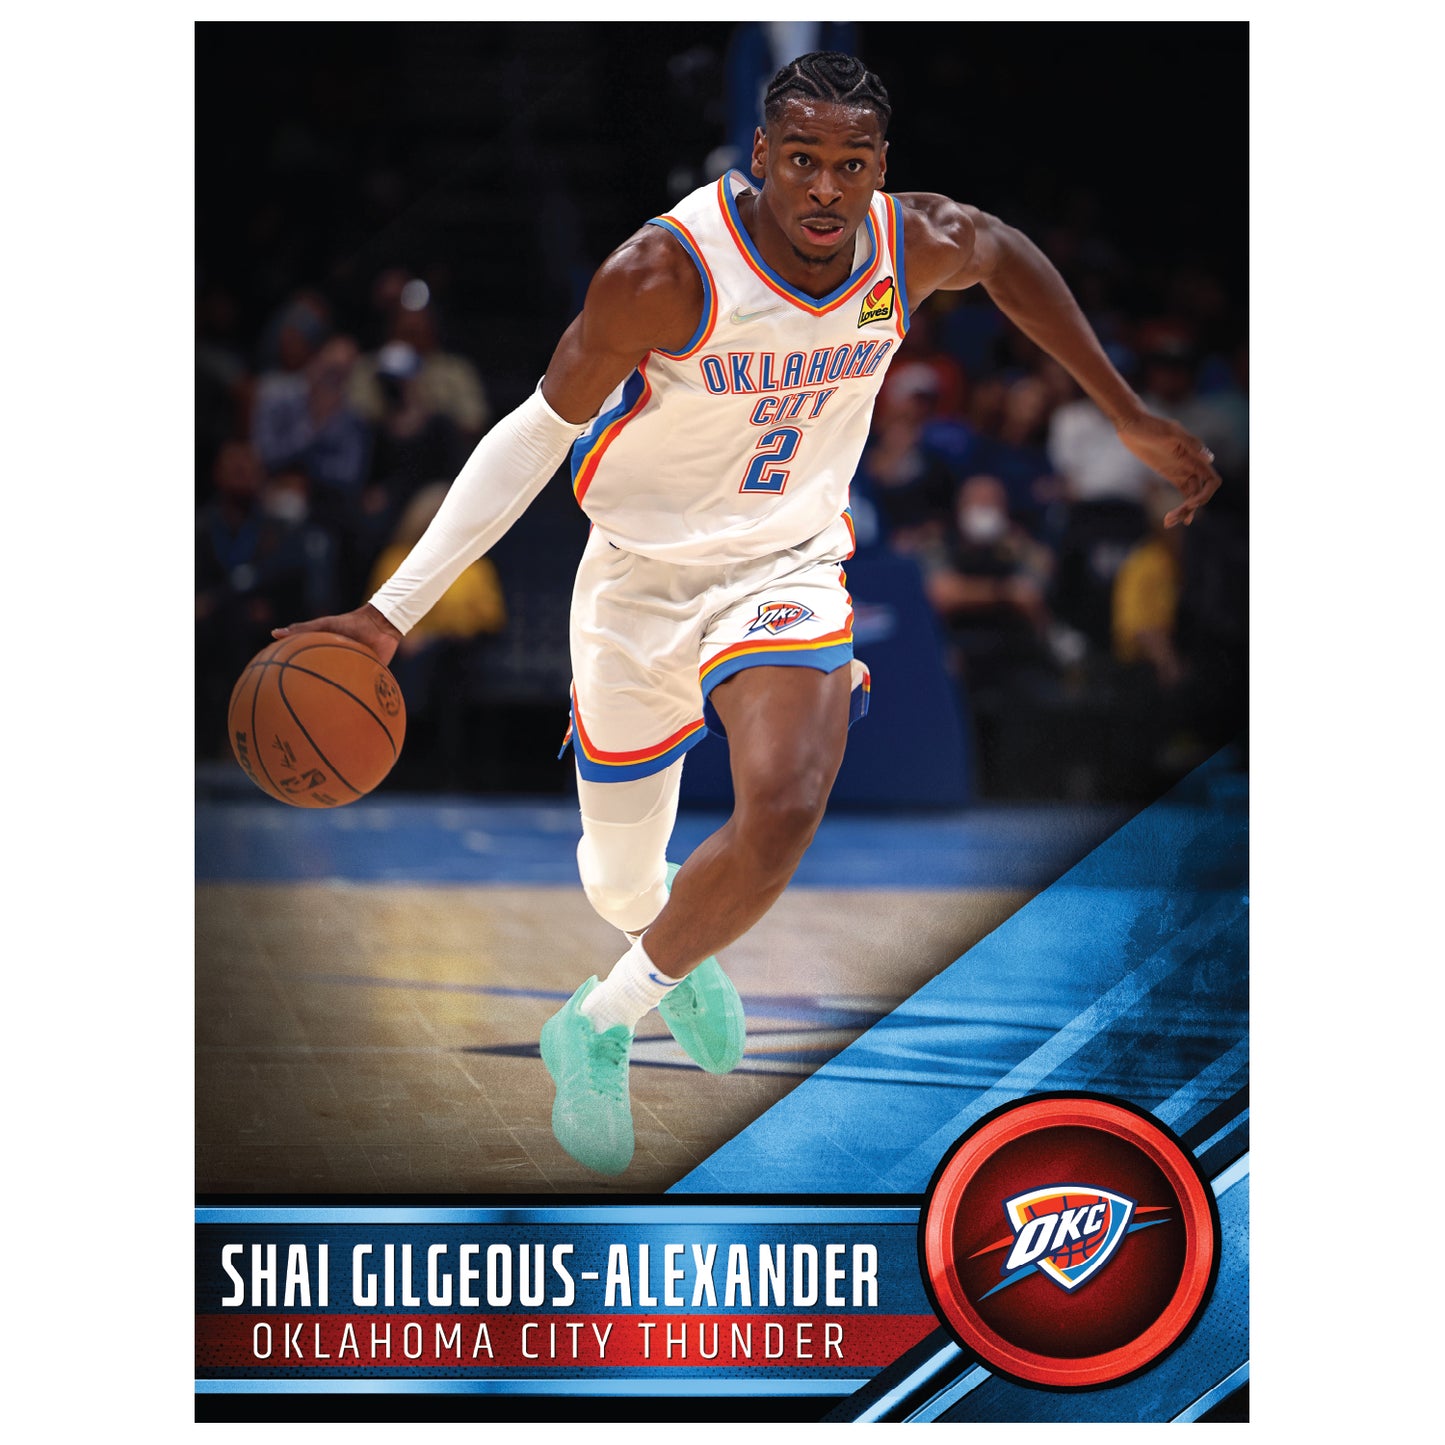 Oklahoma City Thunder: Shai Gilgeous-Alexander 2021 Poster